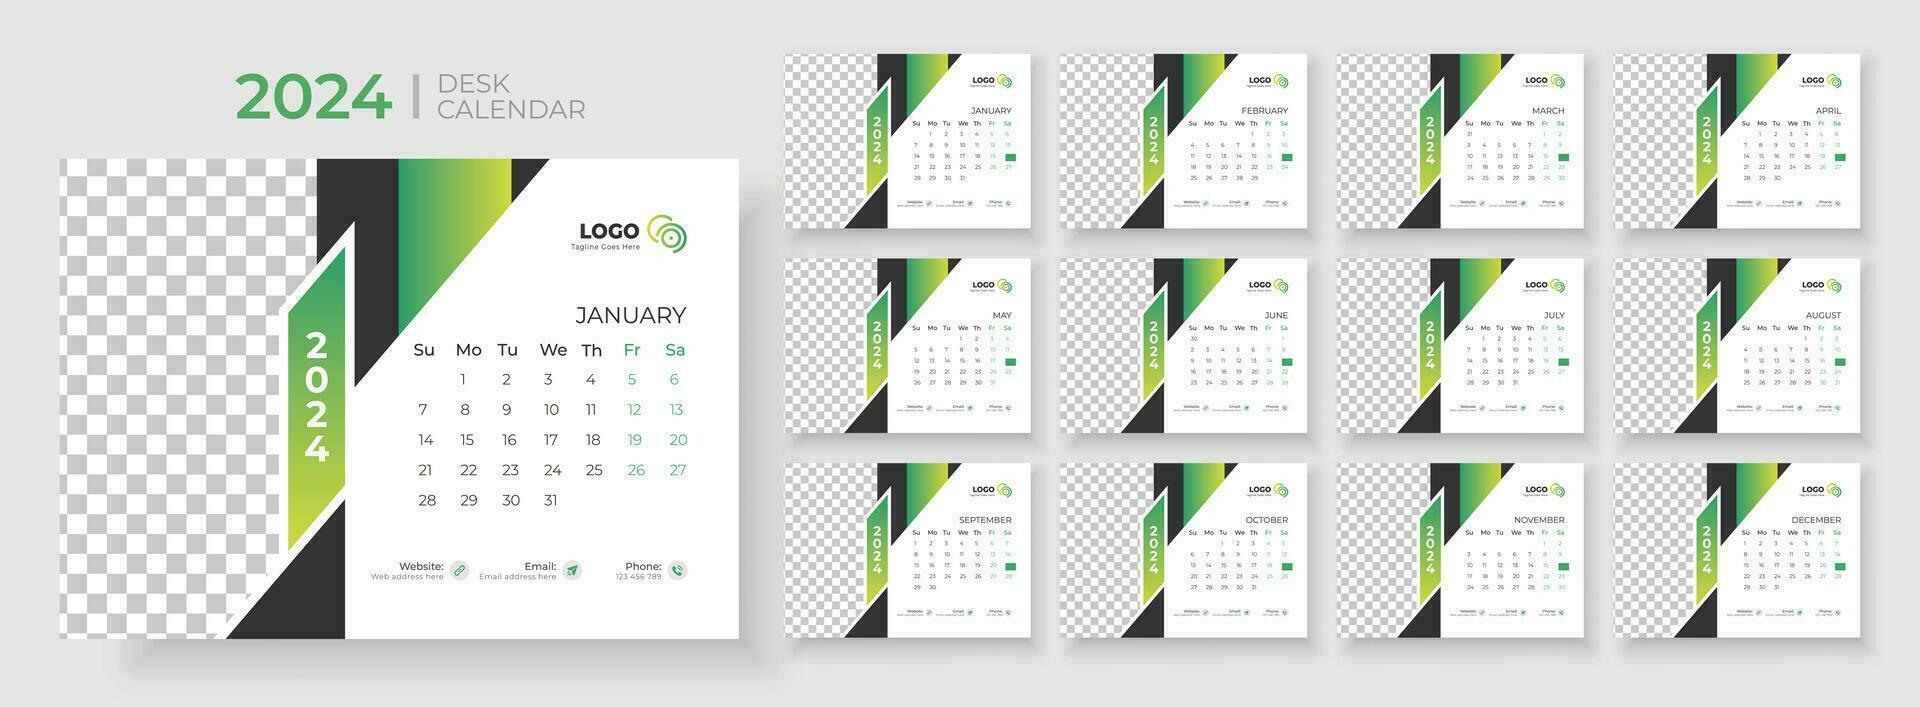 Desk Calendar Template 2024. Desk calendar in a minimalist style. Week Starts on Sunday. Planner for 2024 year. vector